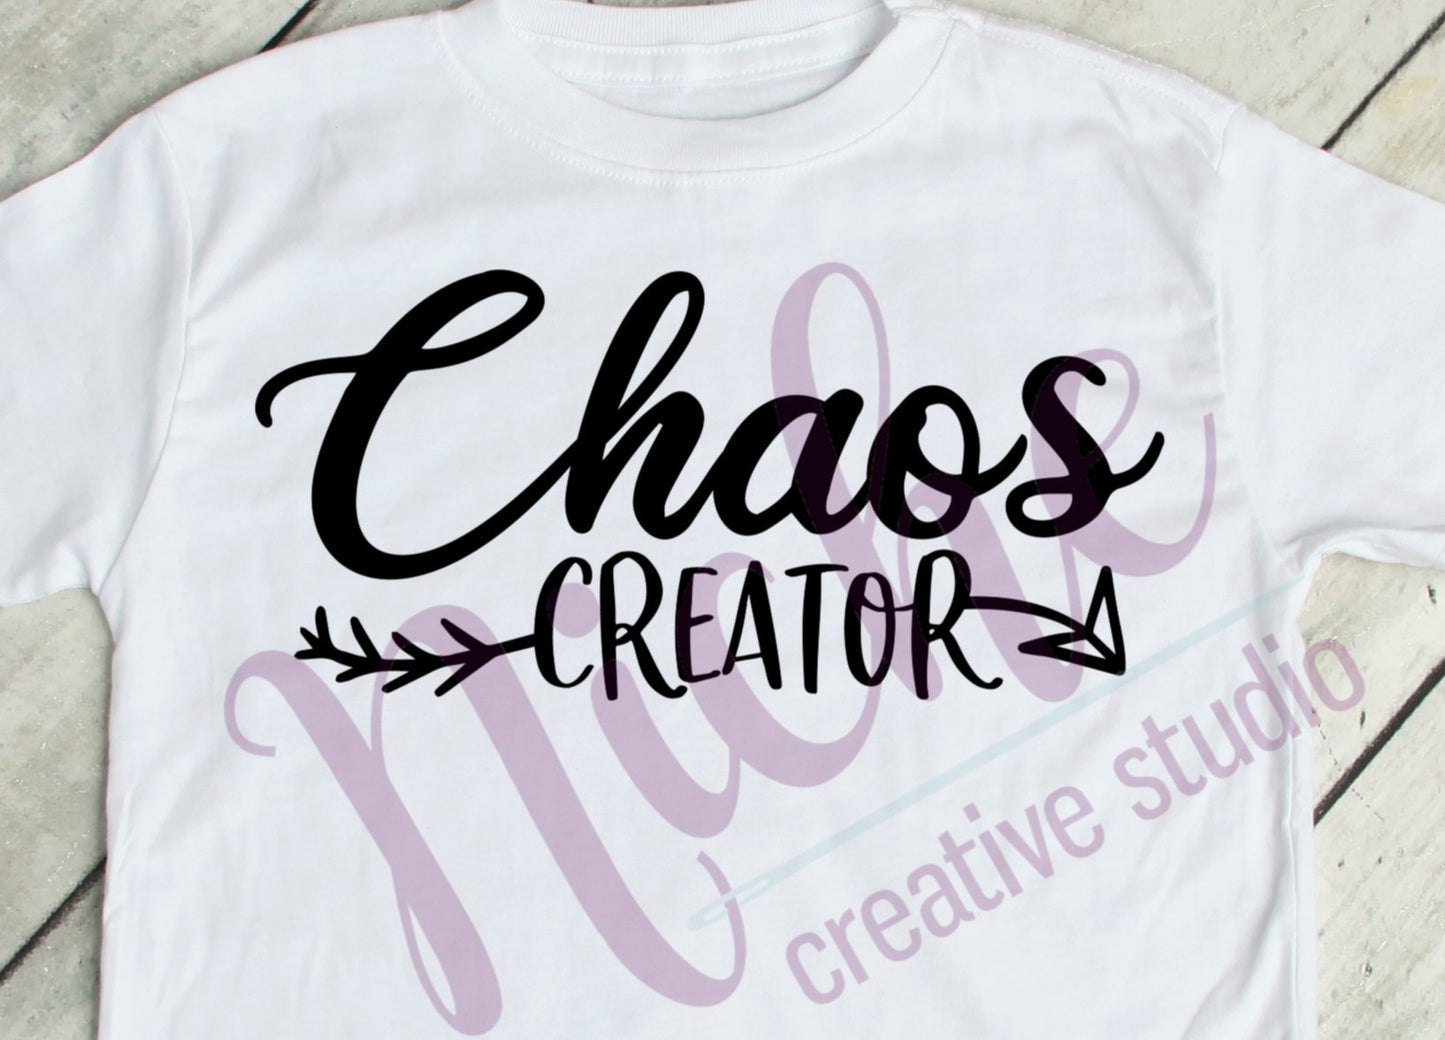 * Chaos Creator Screen Decals